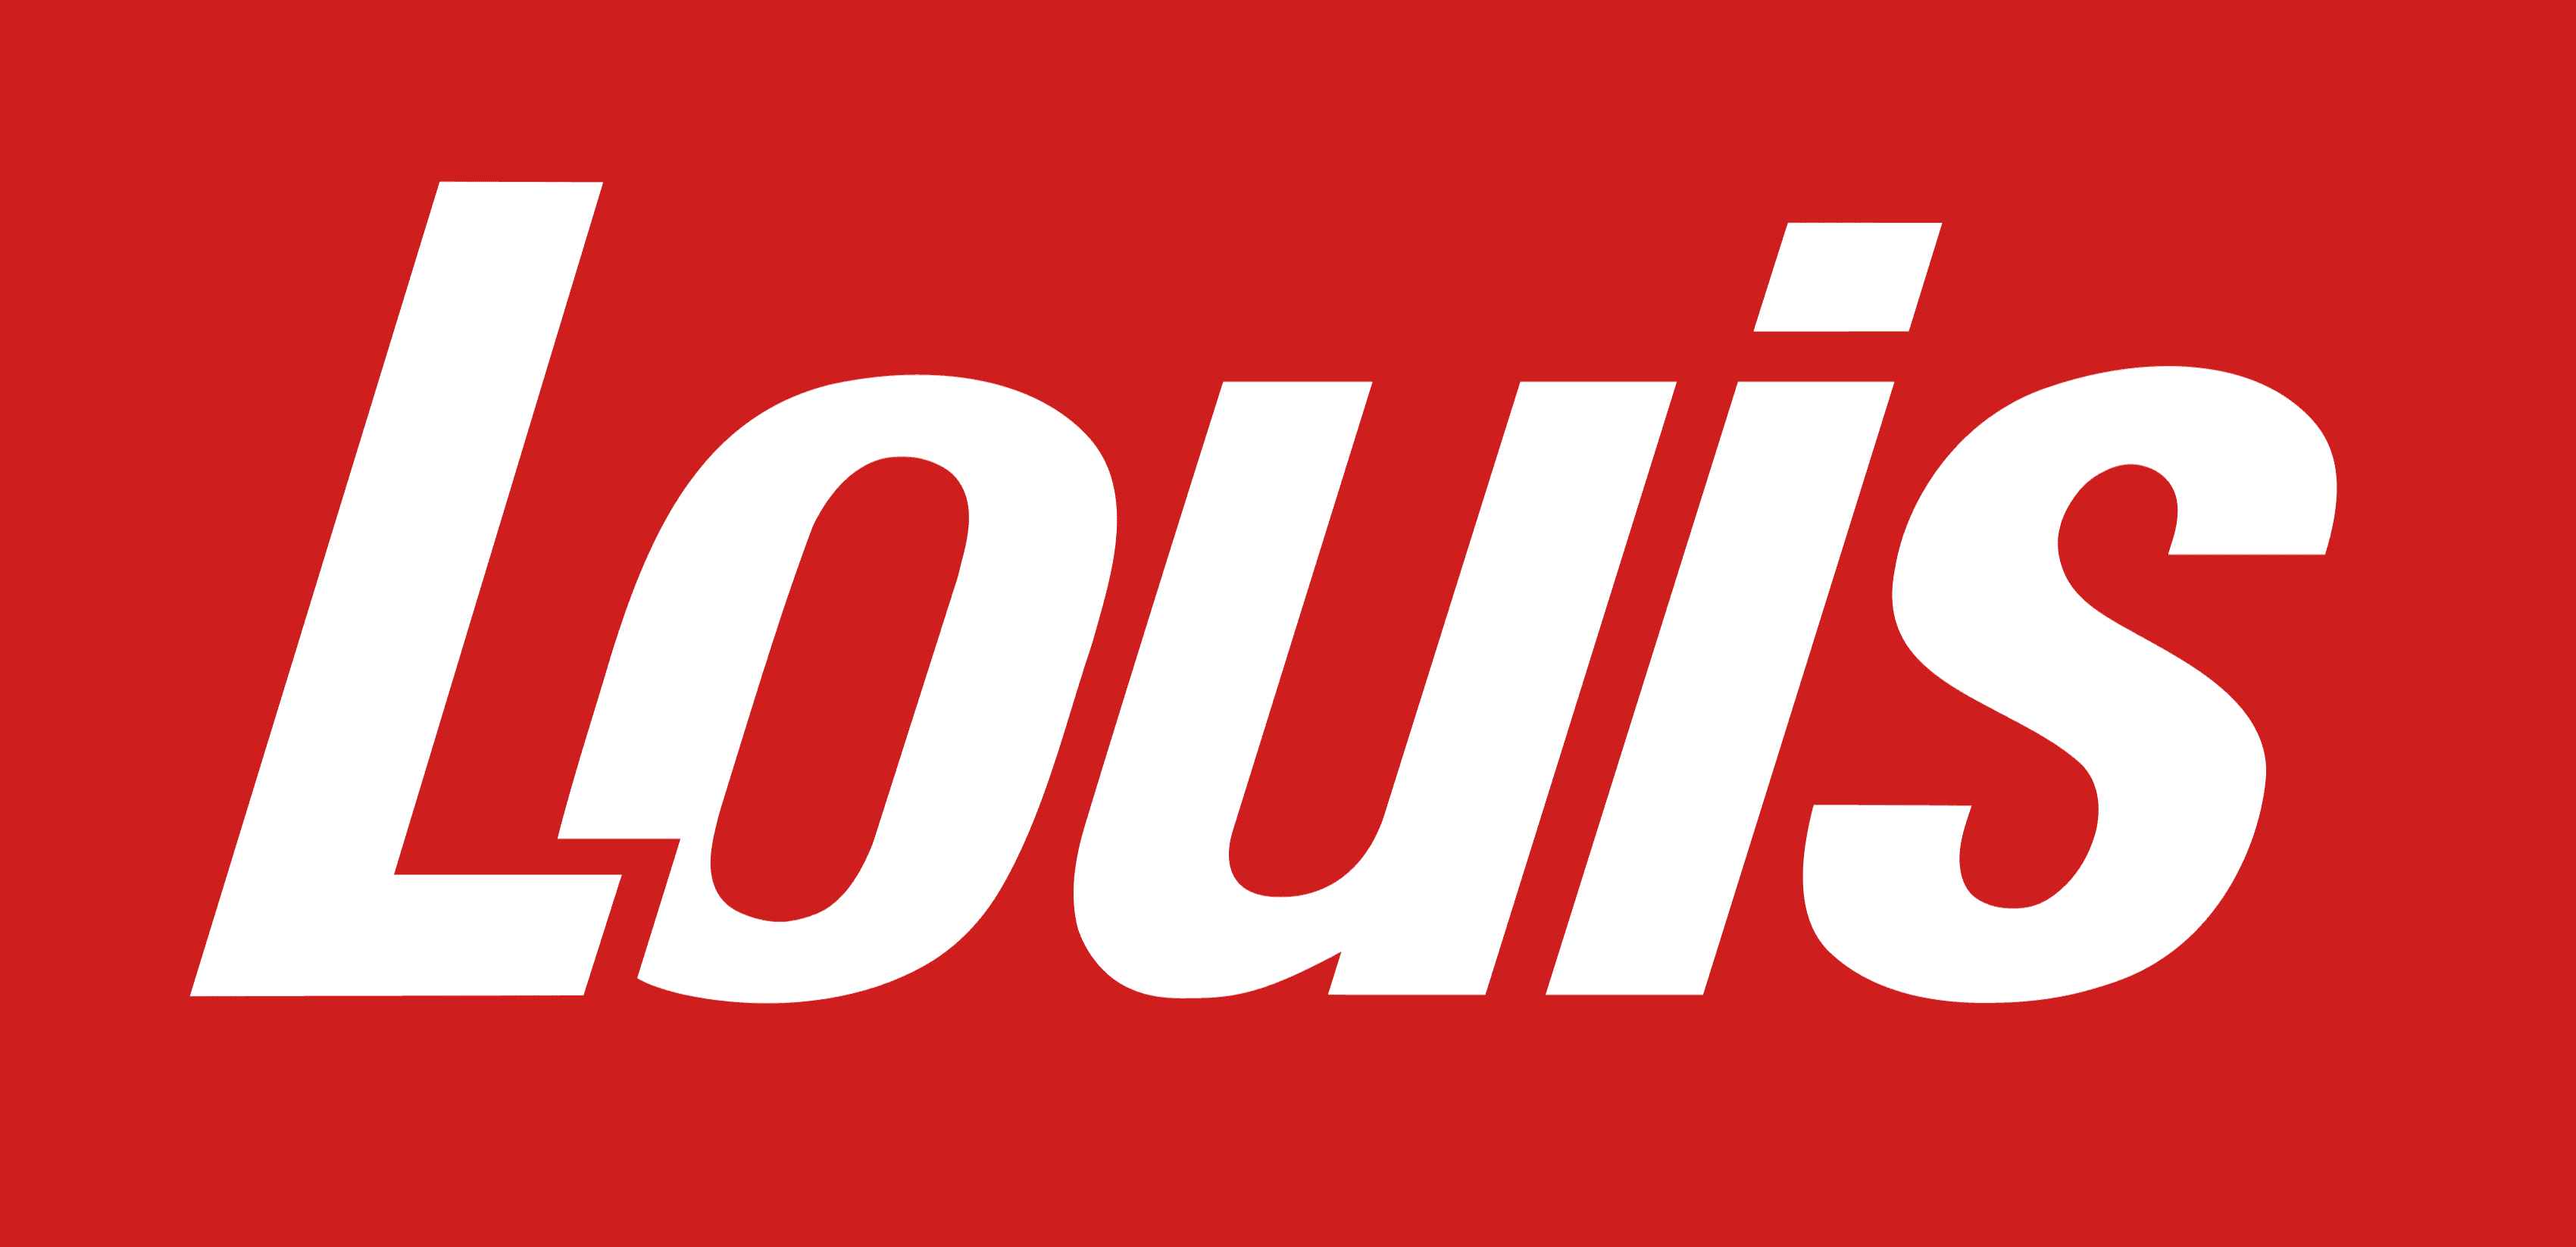 Detlev Louis AG